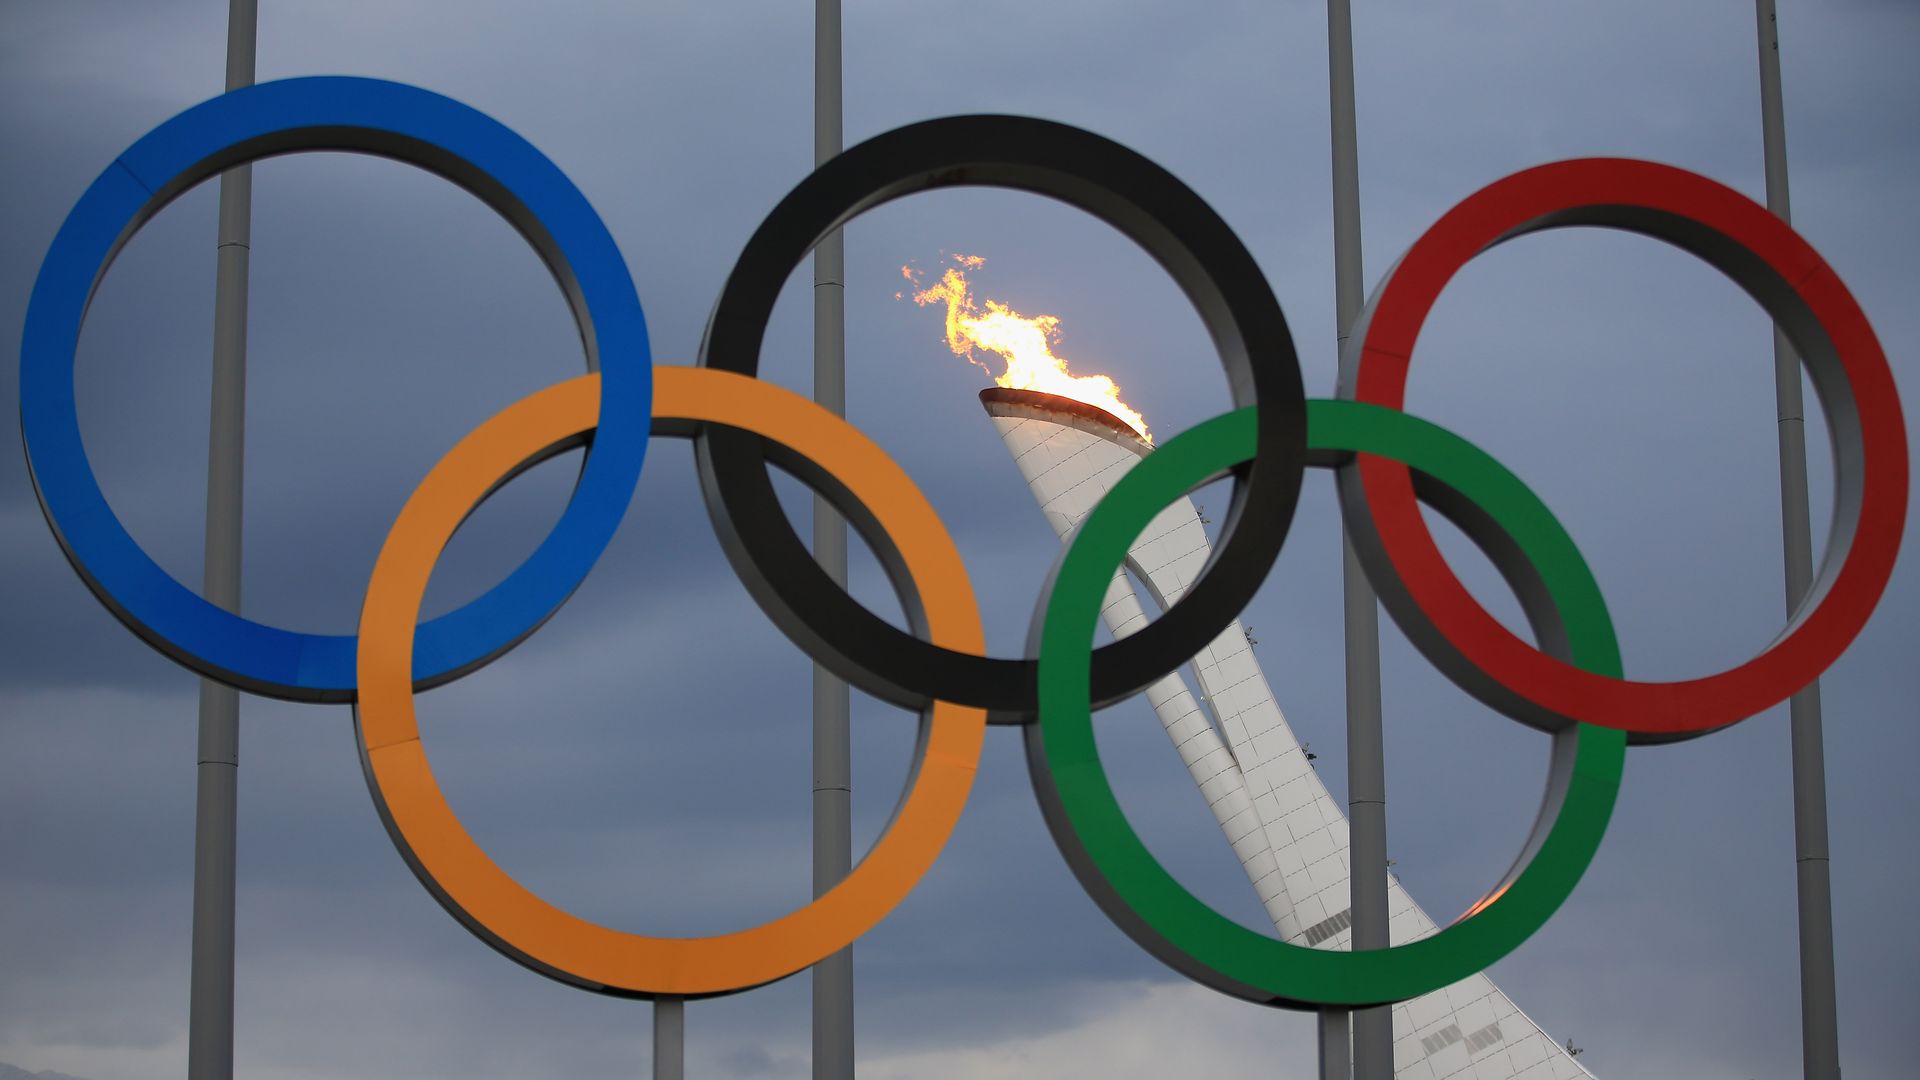 The Olympic Cauldron at the Sochi 2014 Winter Olympics